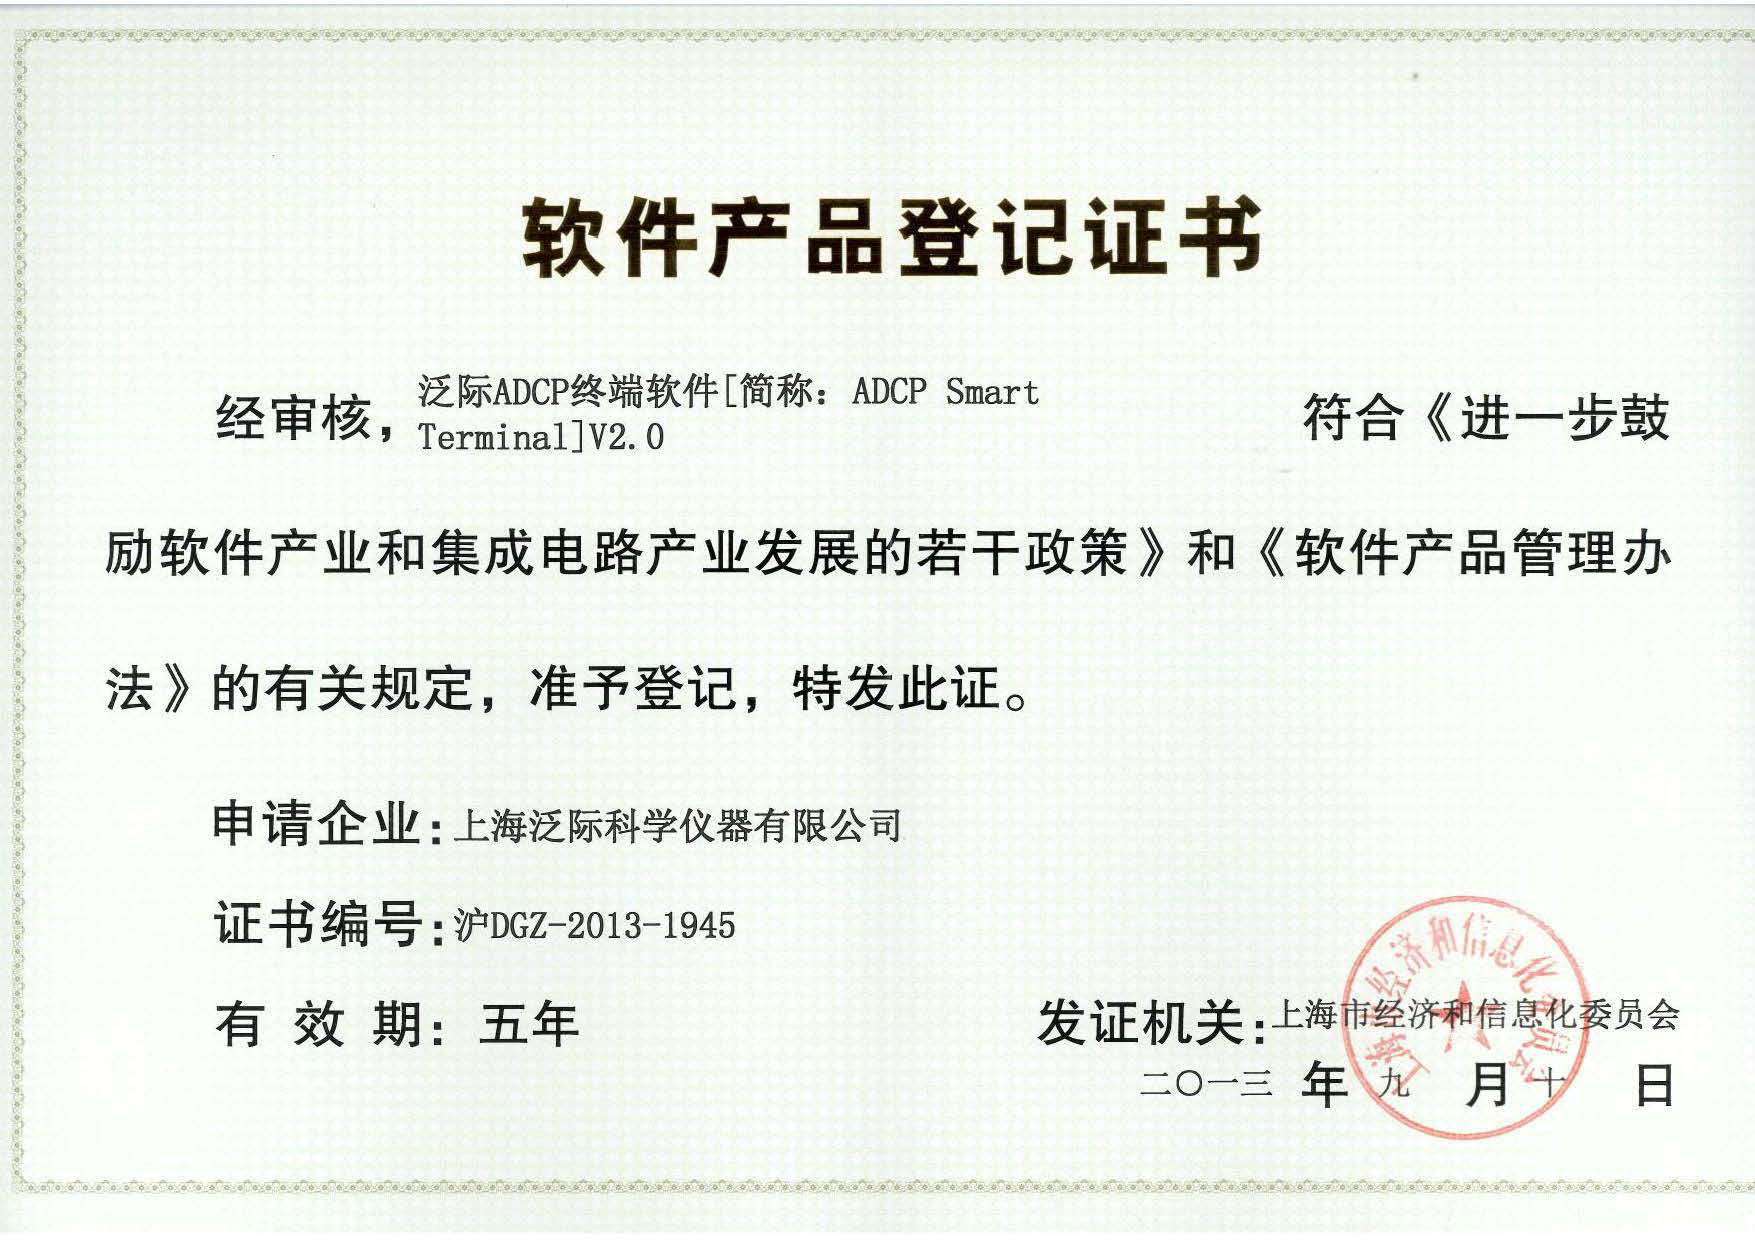 ADCP SmartTerminal 软件产品登记证书.jpg